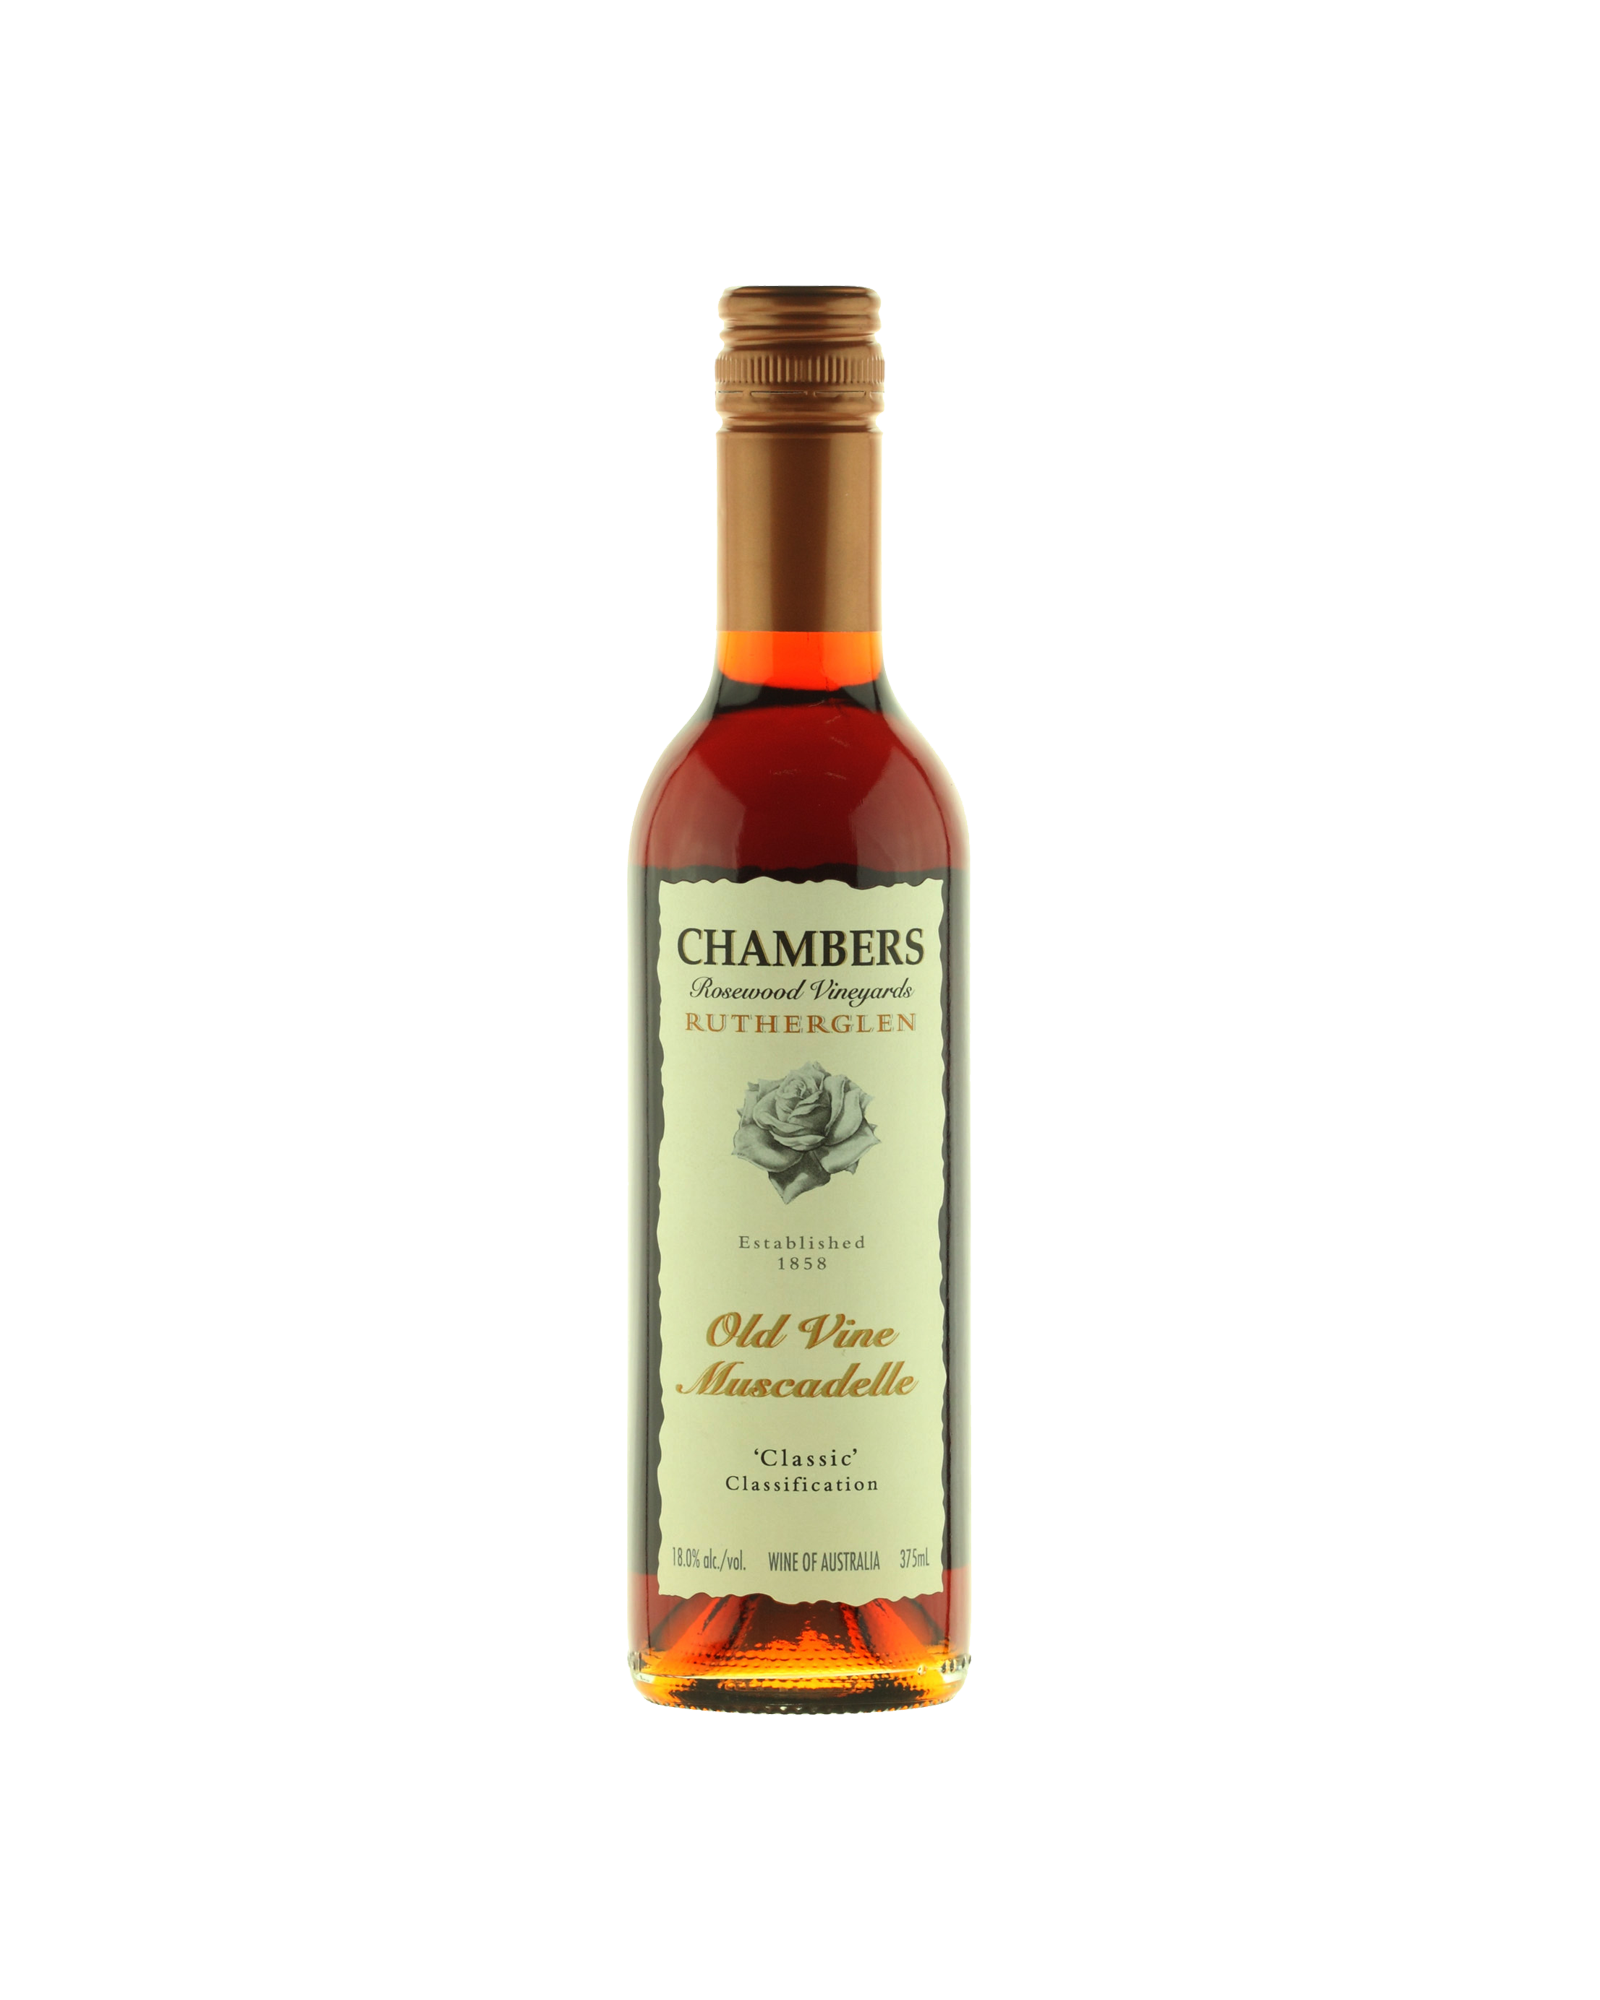 Chambers Old Vine Muscadelle 375ml